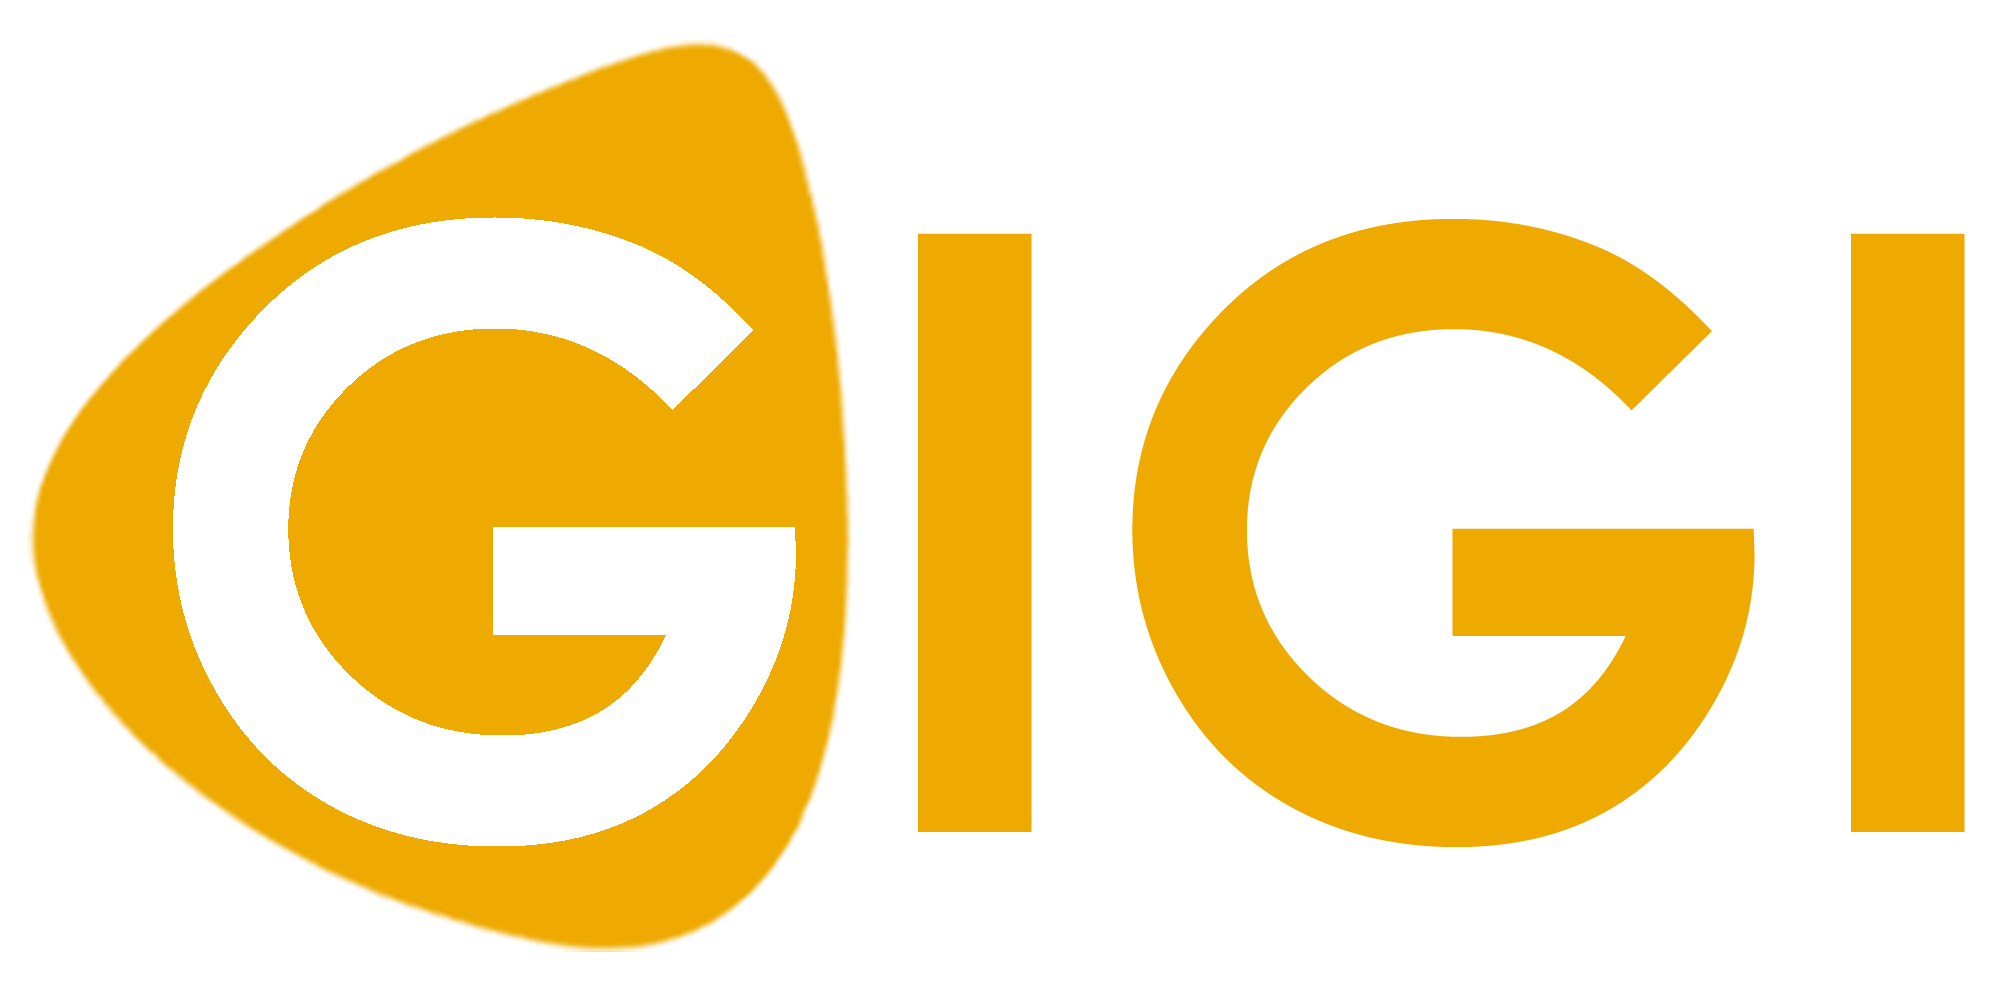 GIGI Logo